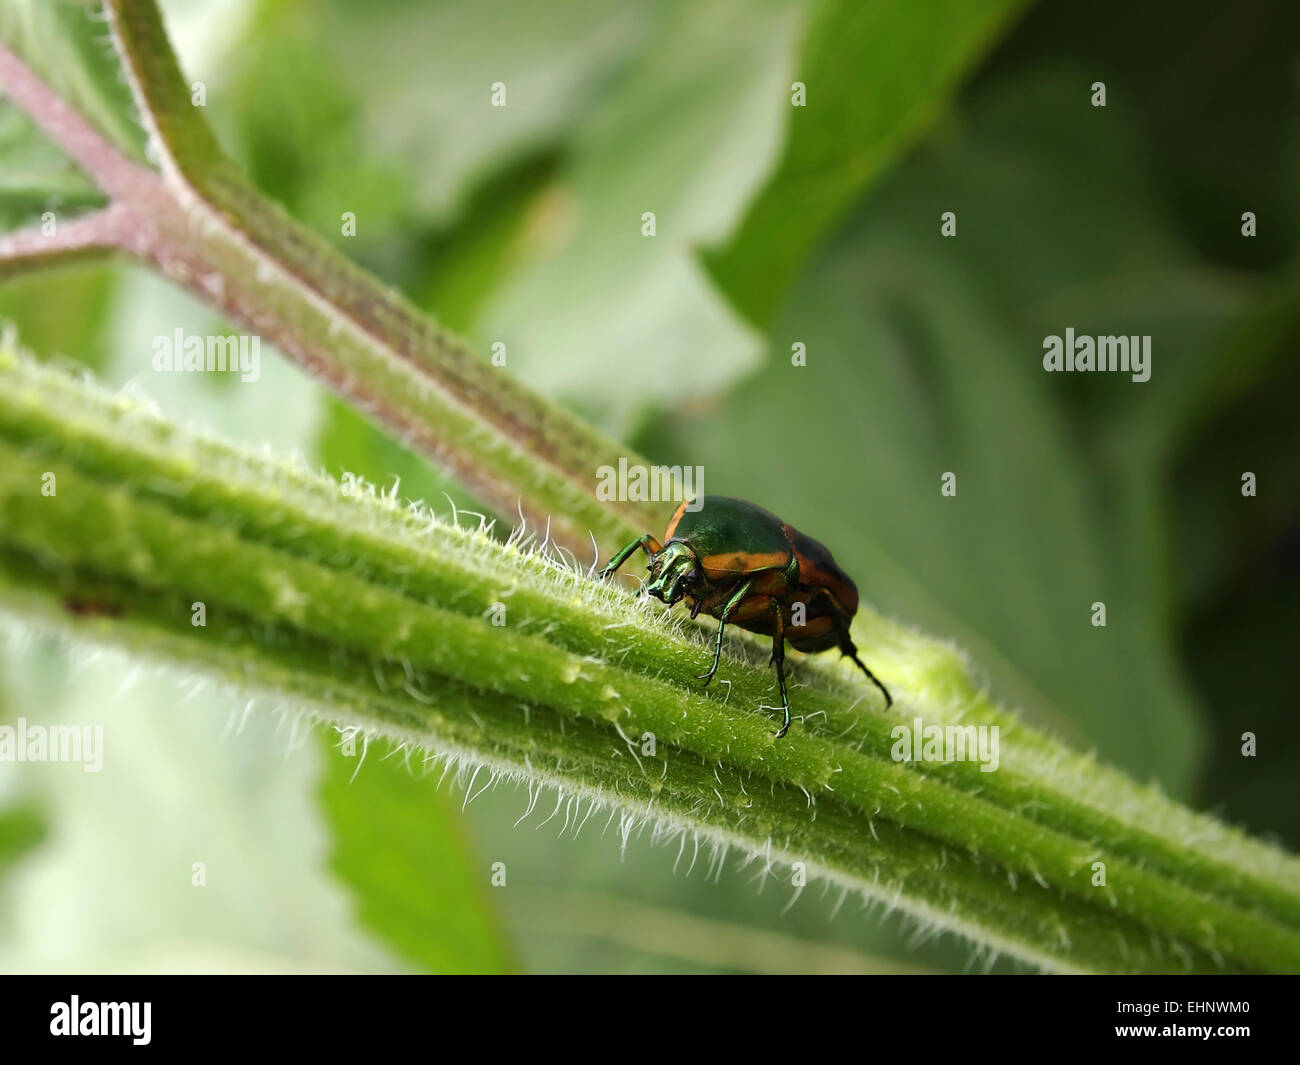 An iridescent Green June Beetle climbs up a hairy stalk in a garden. Stock Photo